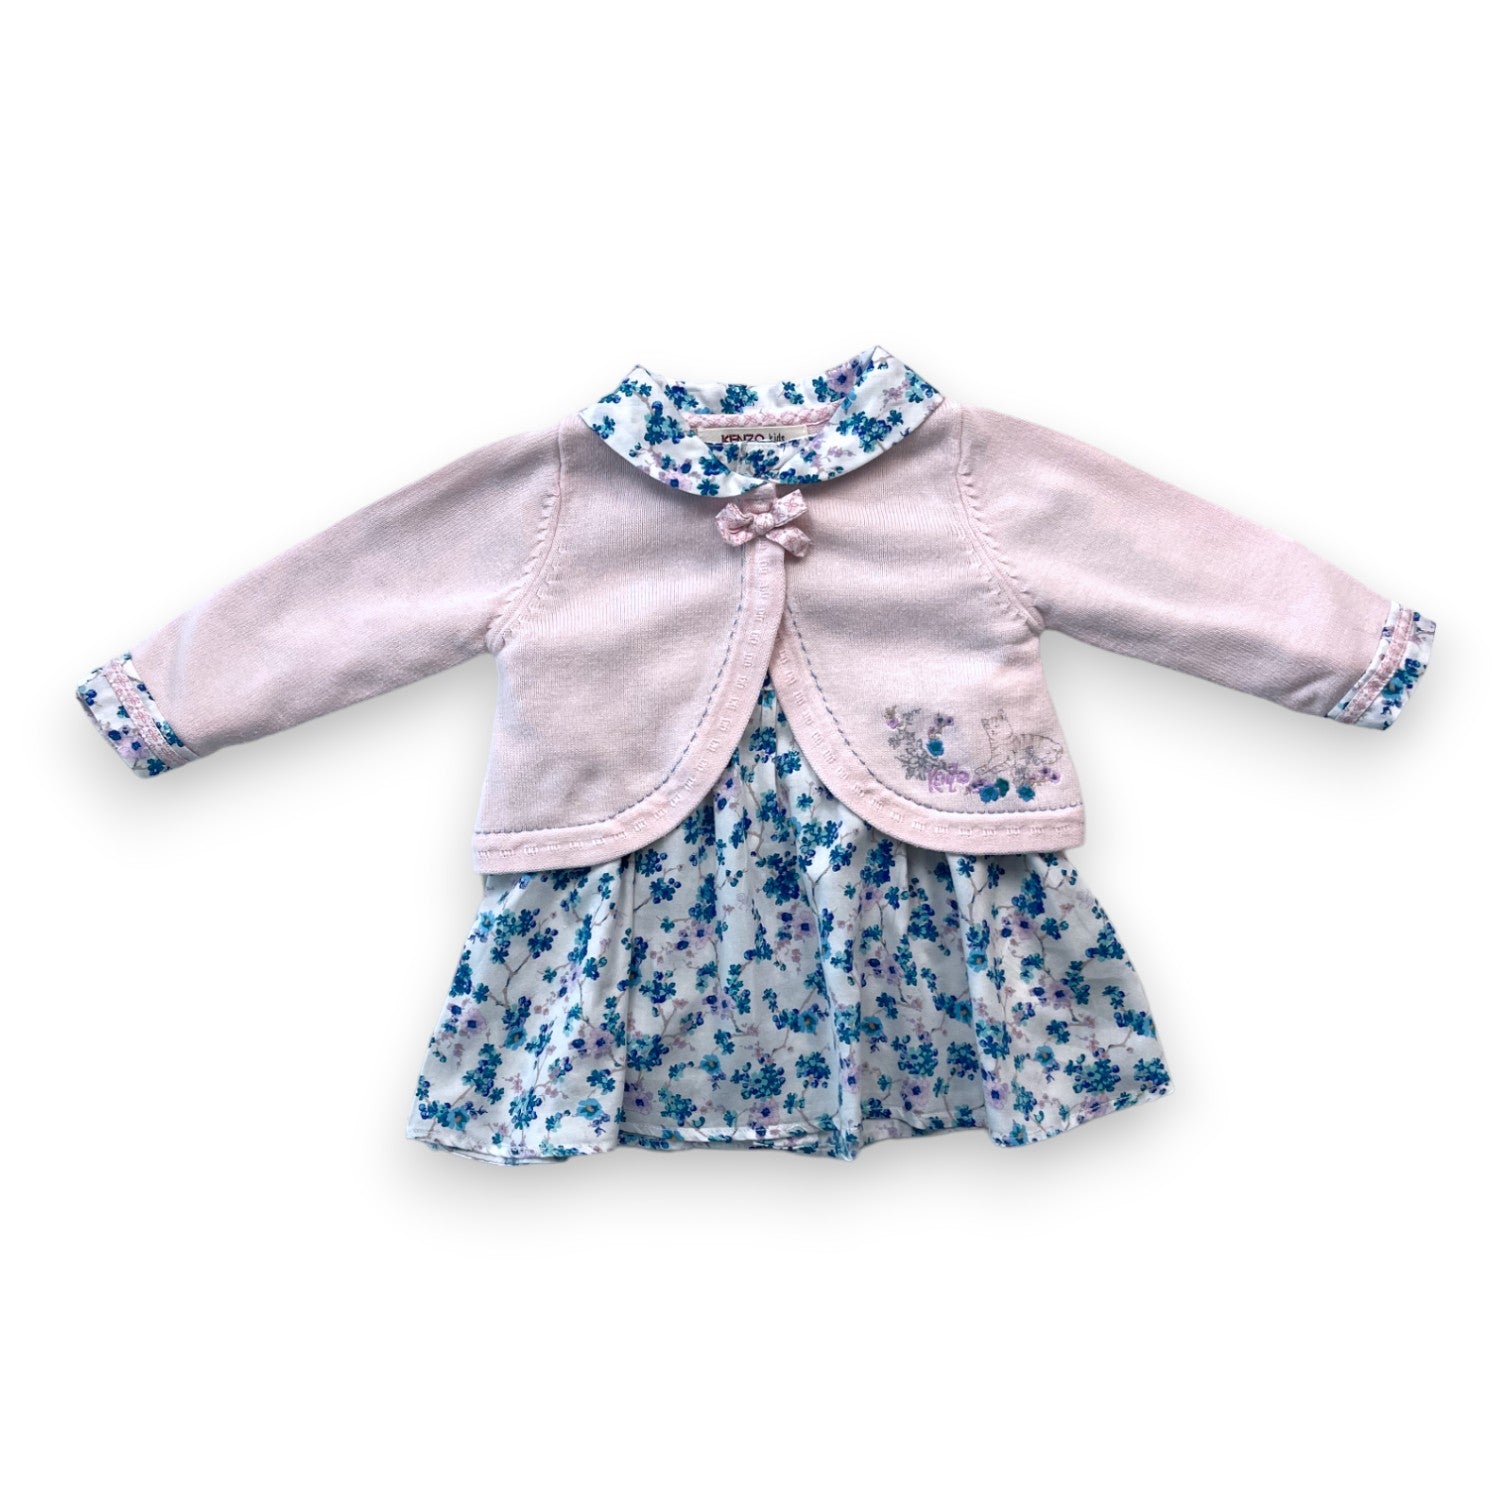 KENZO - Ensemble robe cardigan rose et bleu - 9 mois